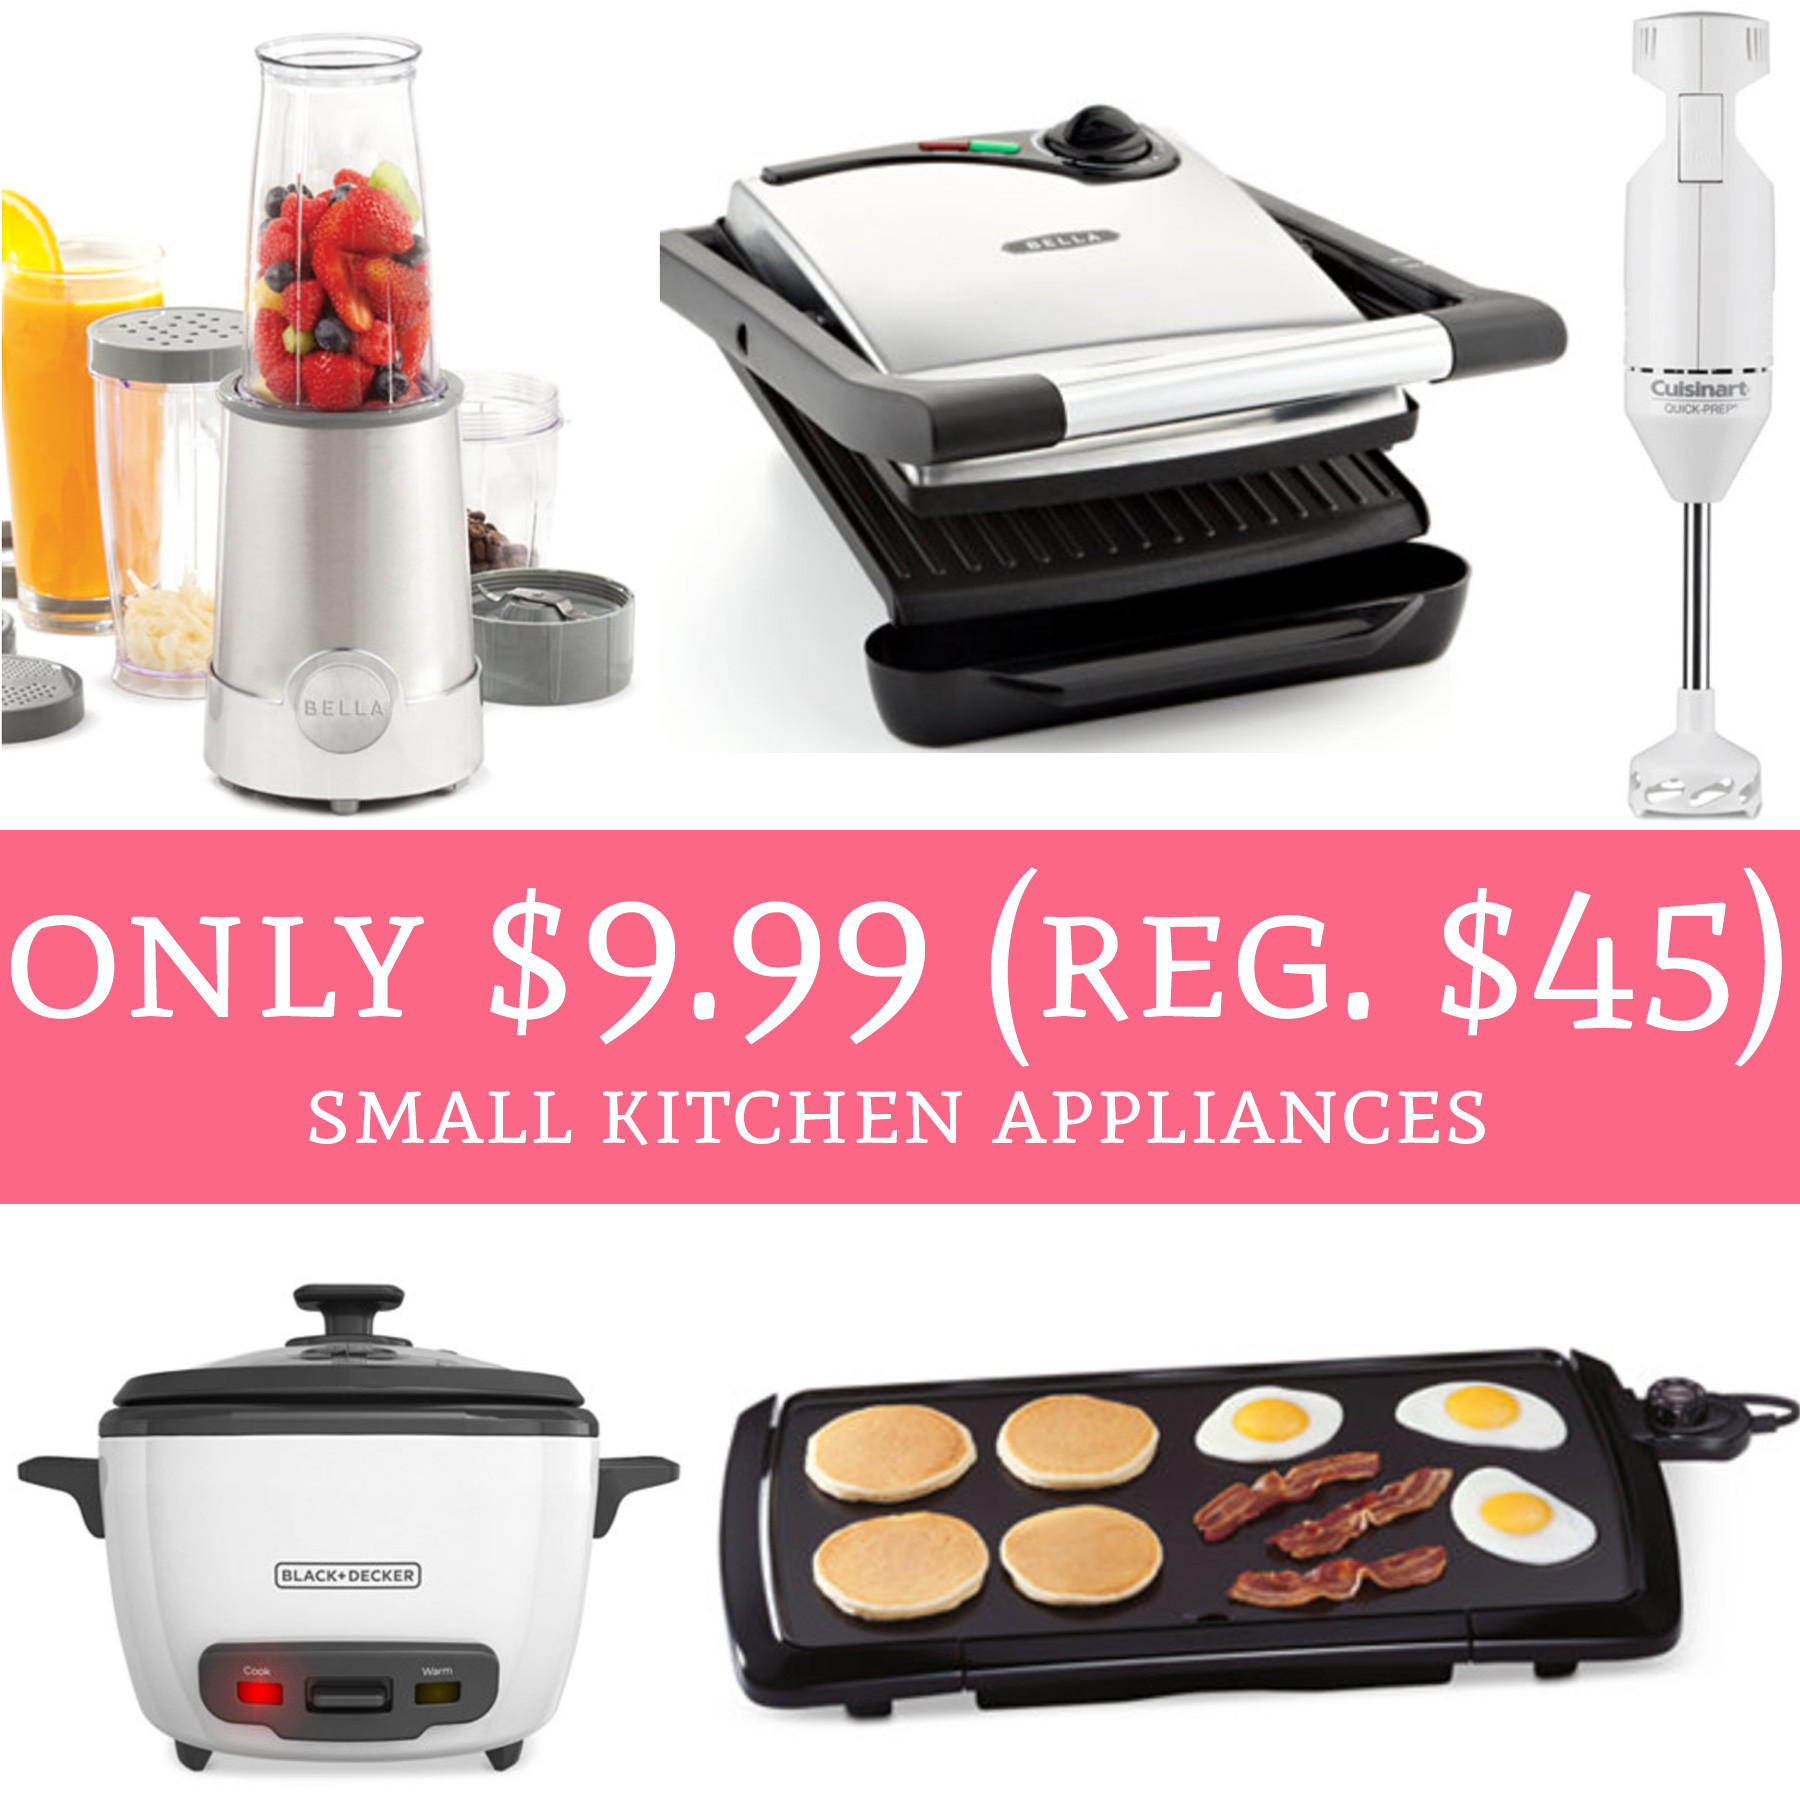 Kitchen Small Applicances
 HOT ly $9 99 Regular $45 Small Kitchen Appliances